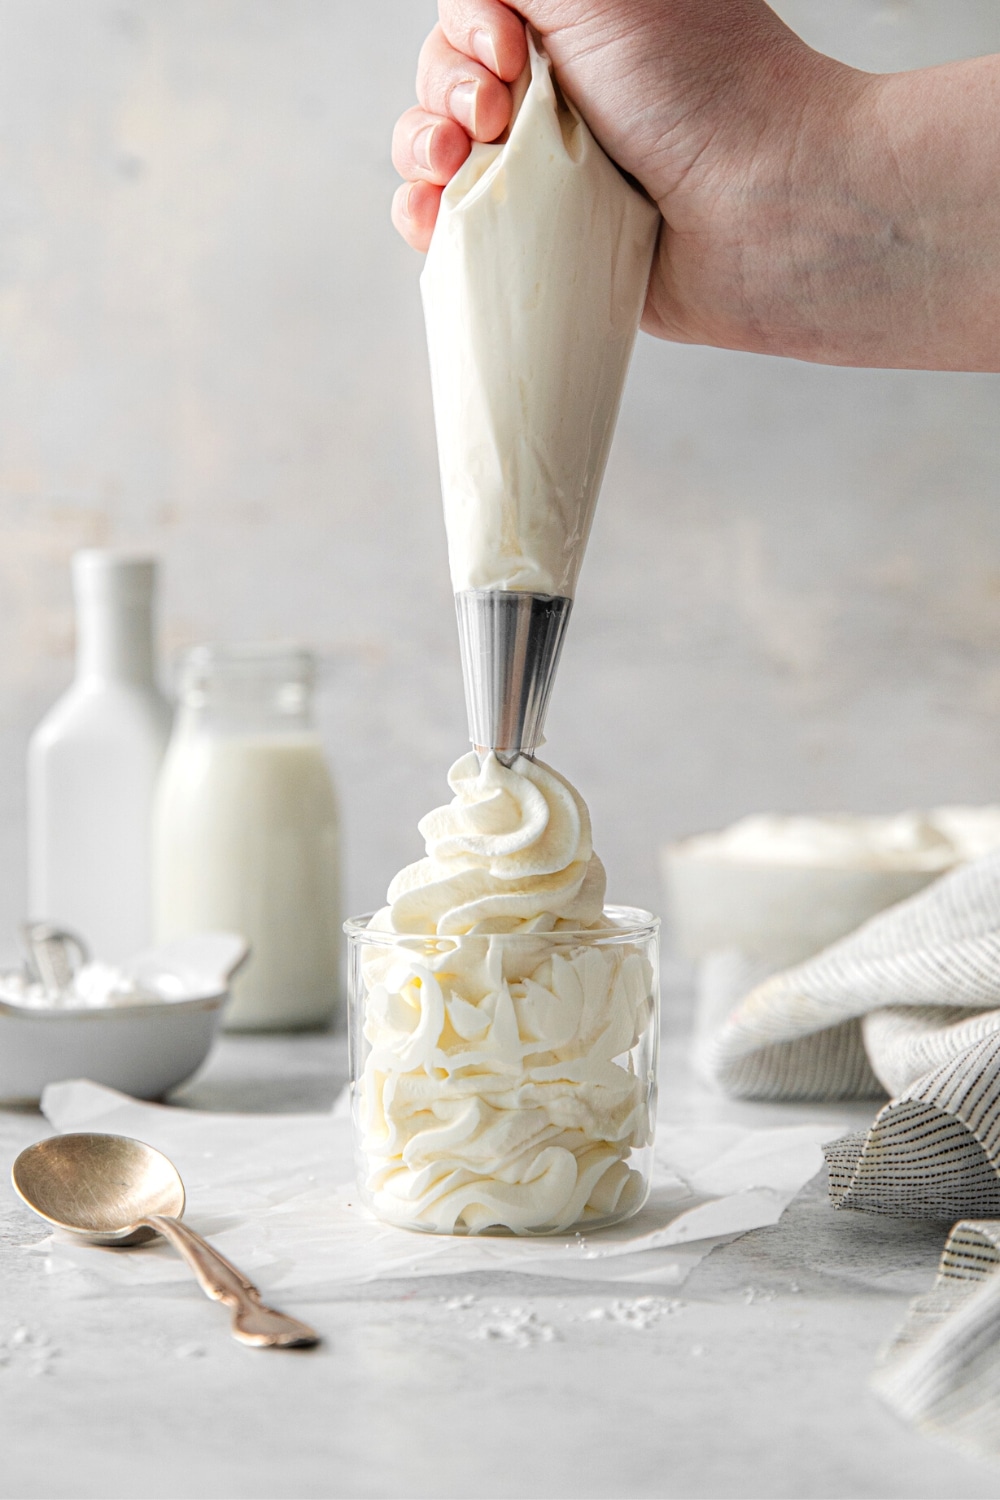 https://www.confettiandbliss.com/wp-content/uploads/2017/07/Homemade-Vanilla-Whipped-Cream-6.jpg